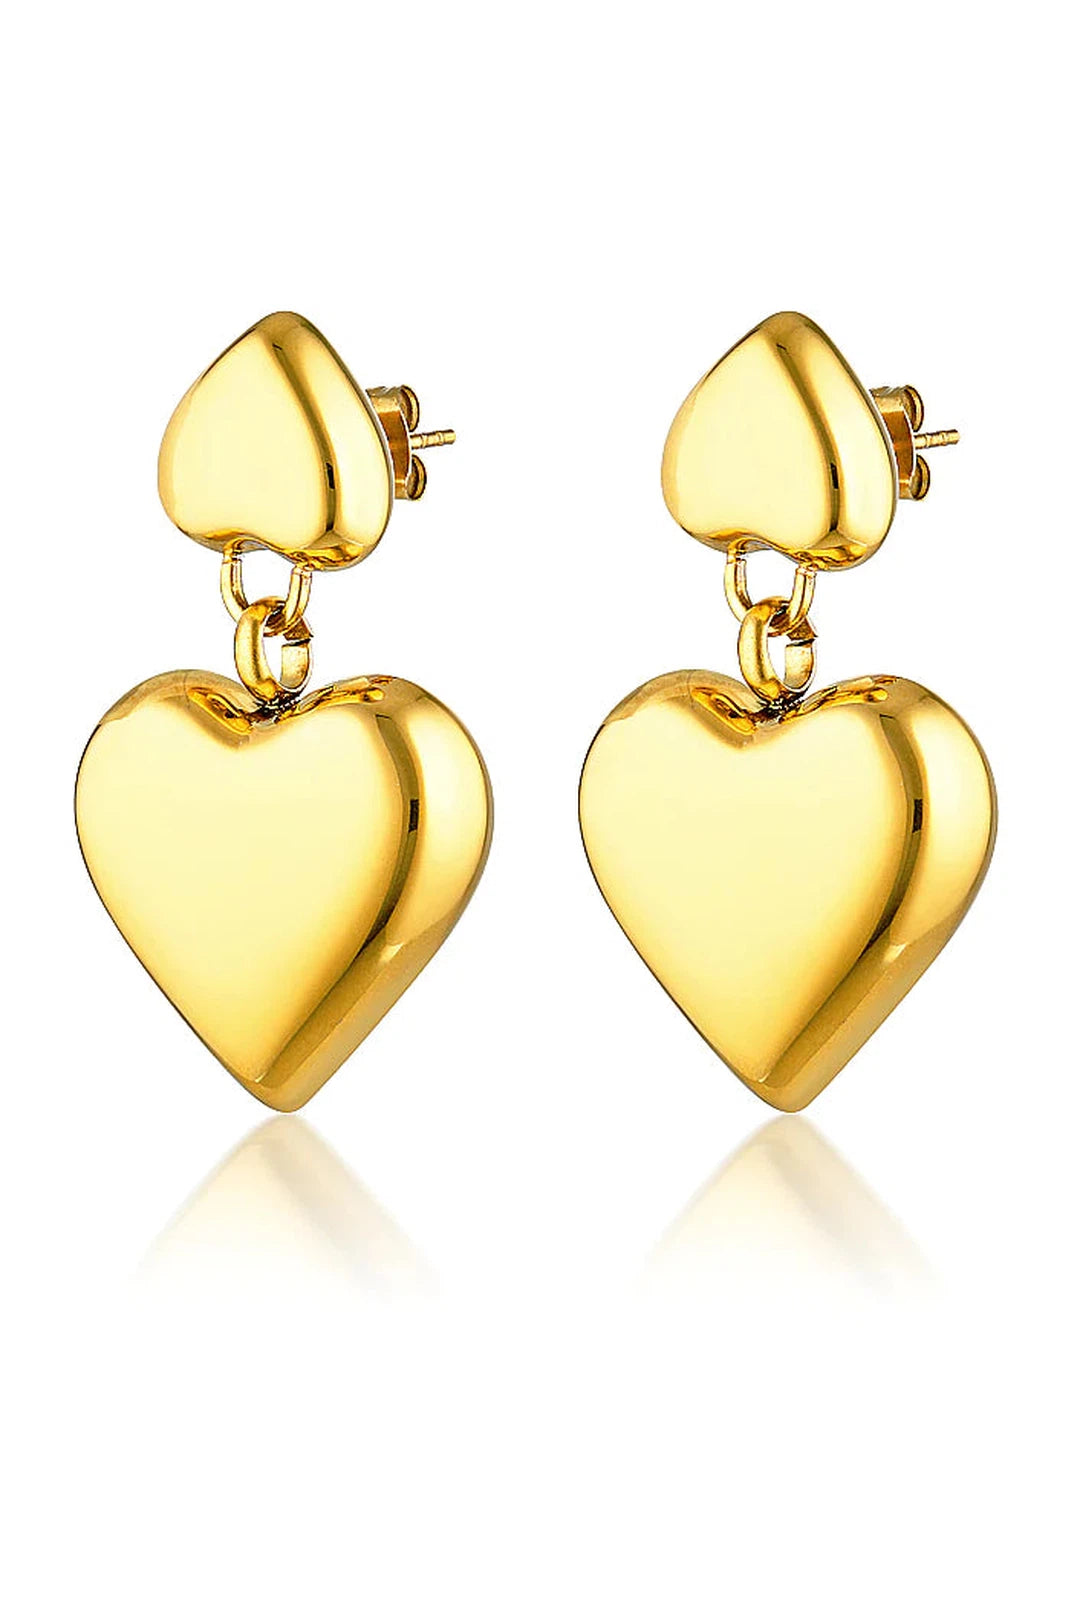 Romee heart earrings, gold